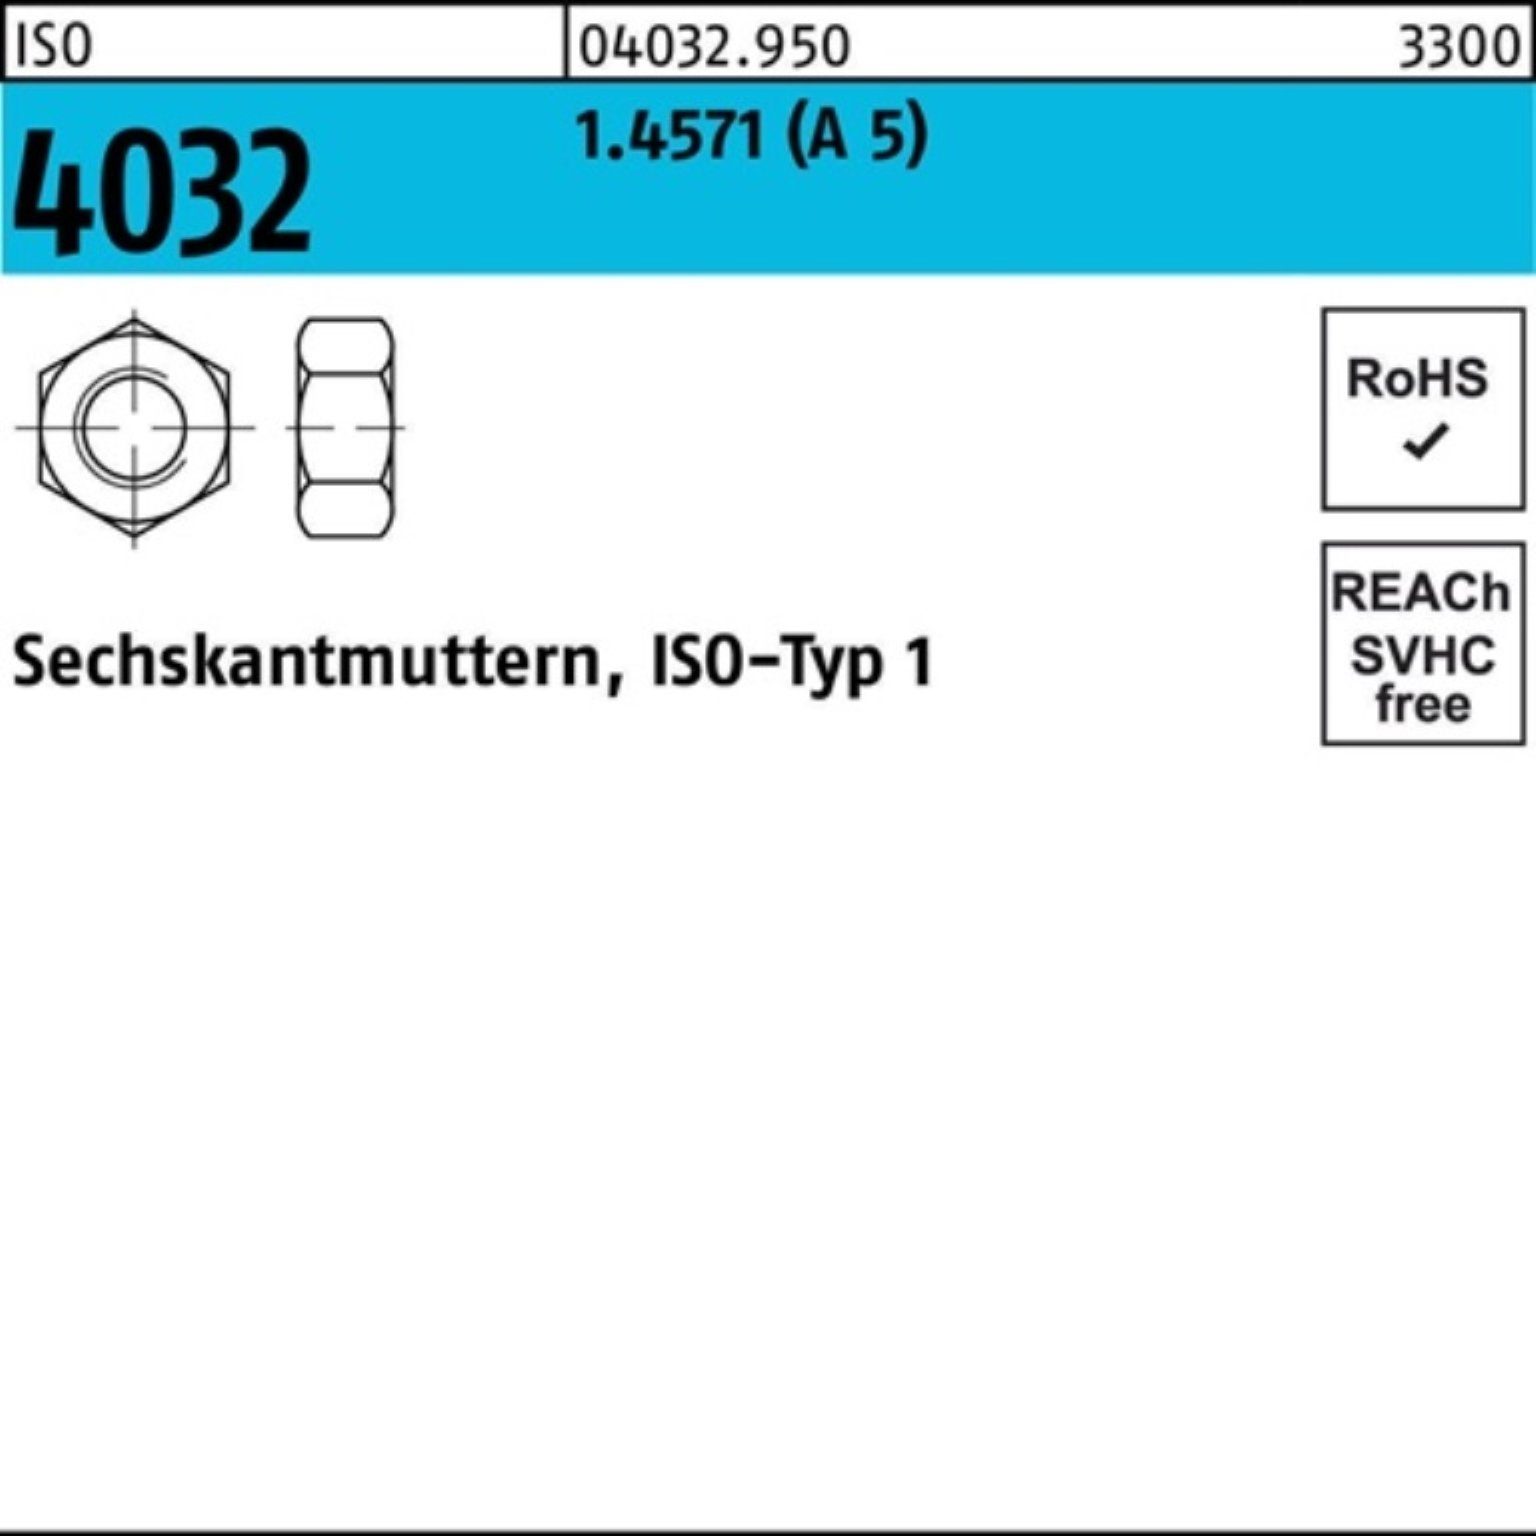 4032 M8 A Pack Bufab 5 Sechskantmutter 1.4571 4032 ISO 100er 100 ISO Muttern Stück